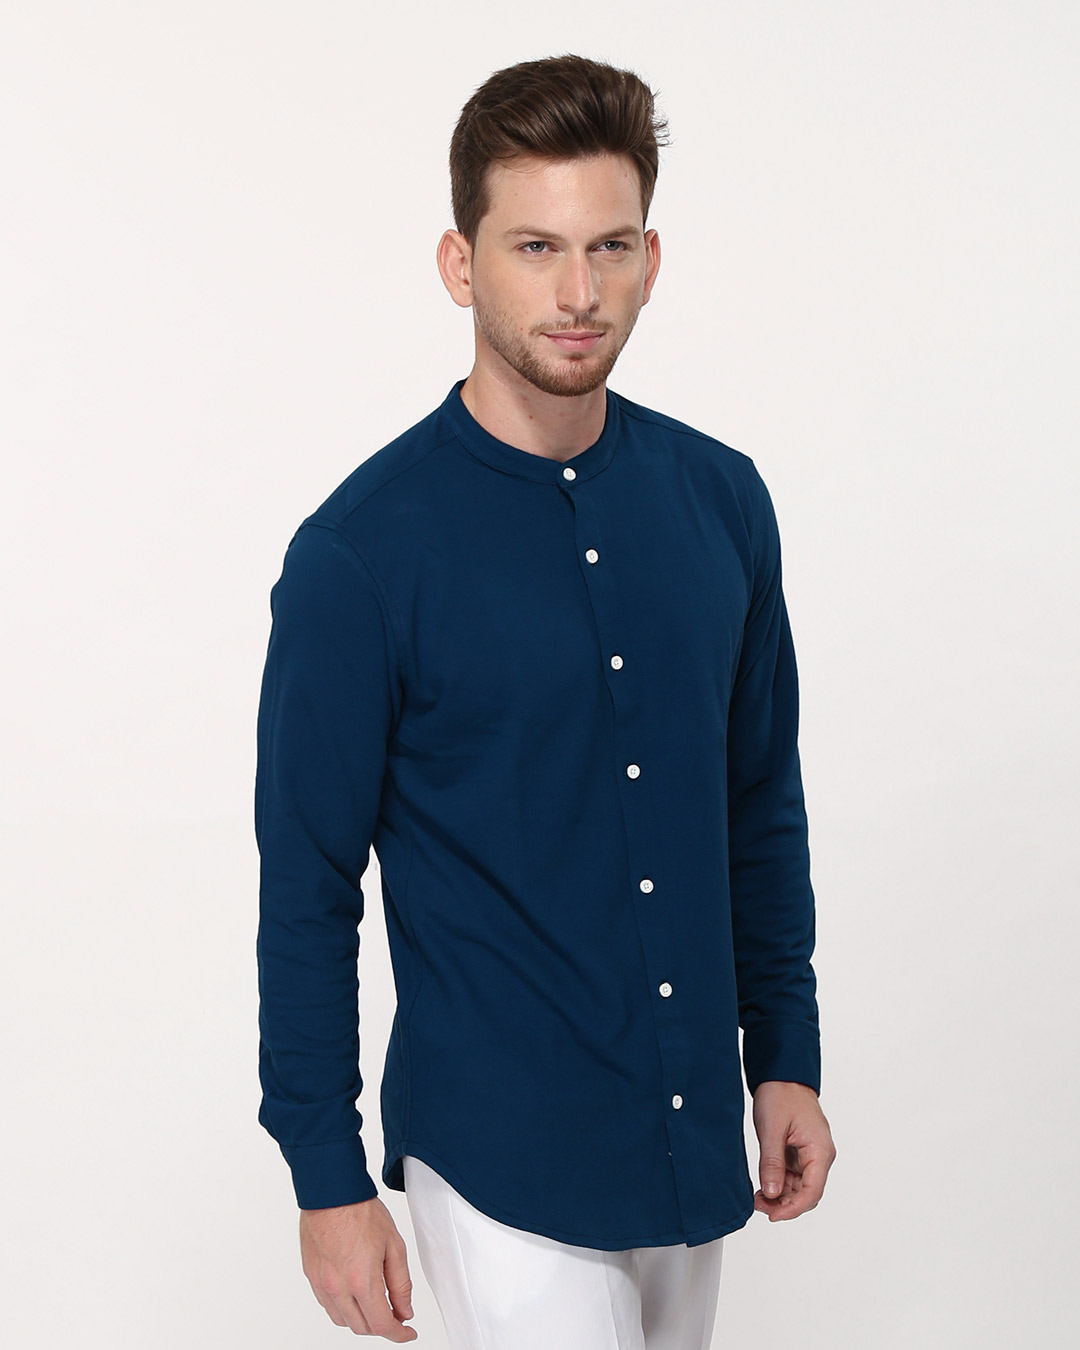 Buy Sydney Blue Mandarin Collar Full Sleeve Pique Shirt Online at Bewakoof